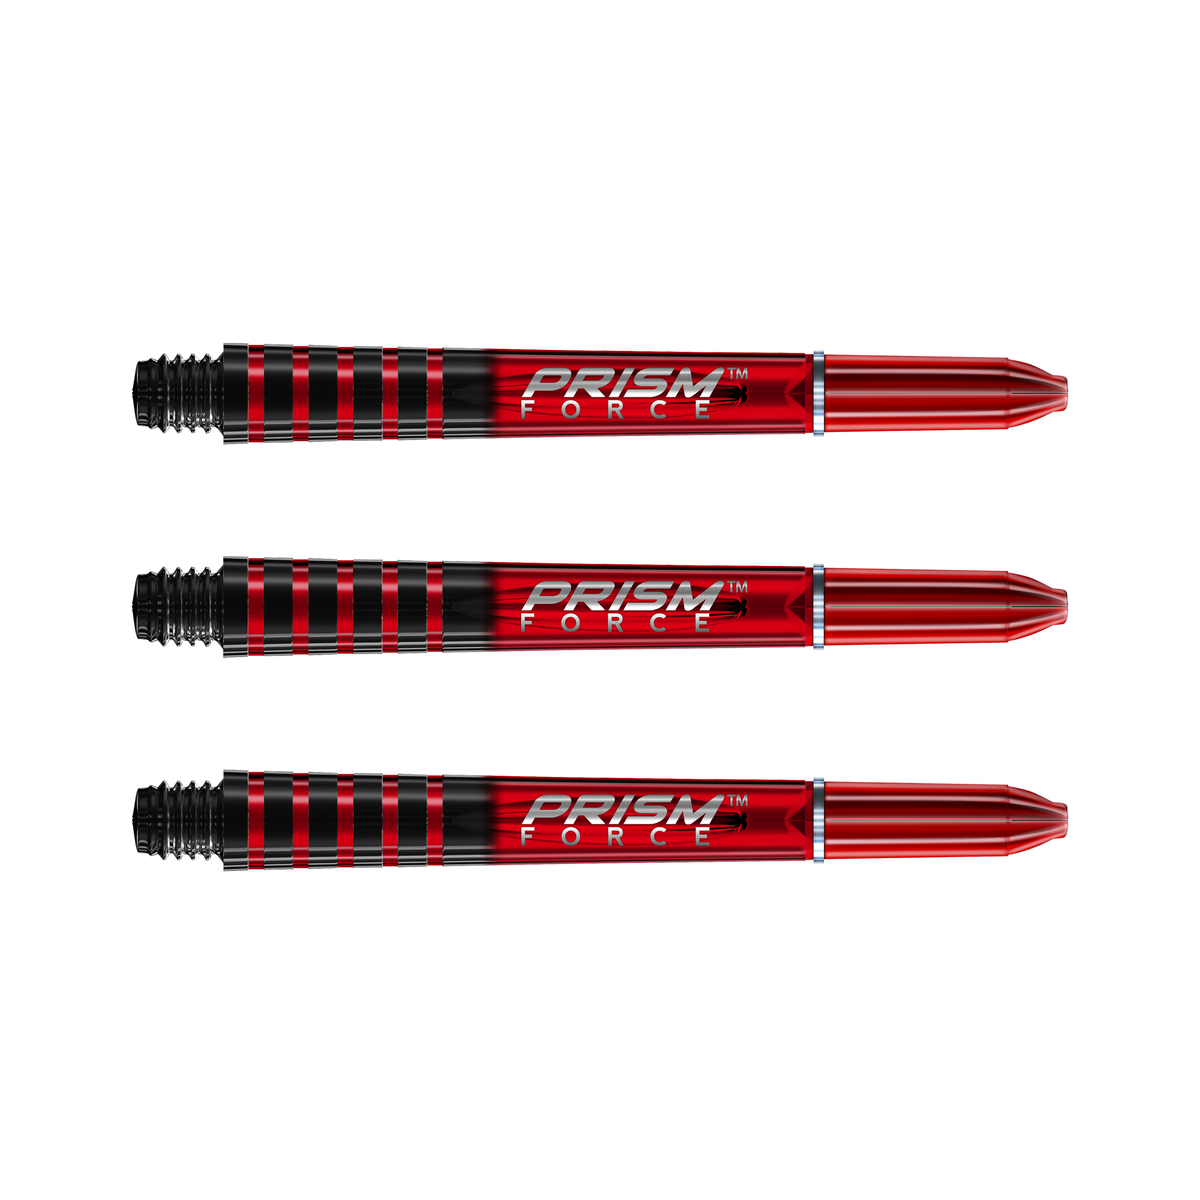 Winmau Prism Force Red Darts Shafts